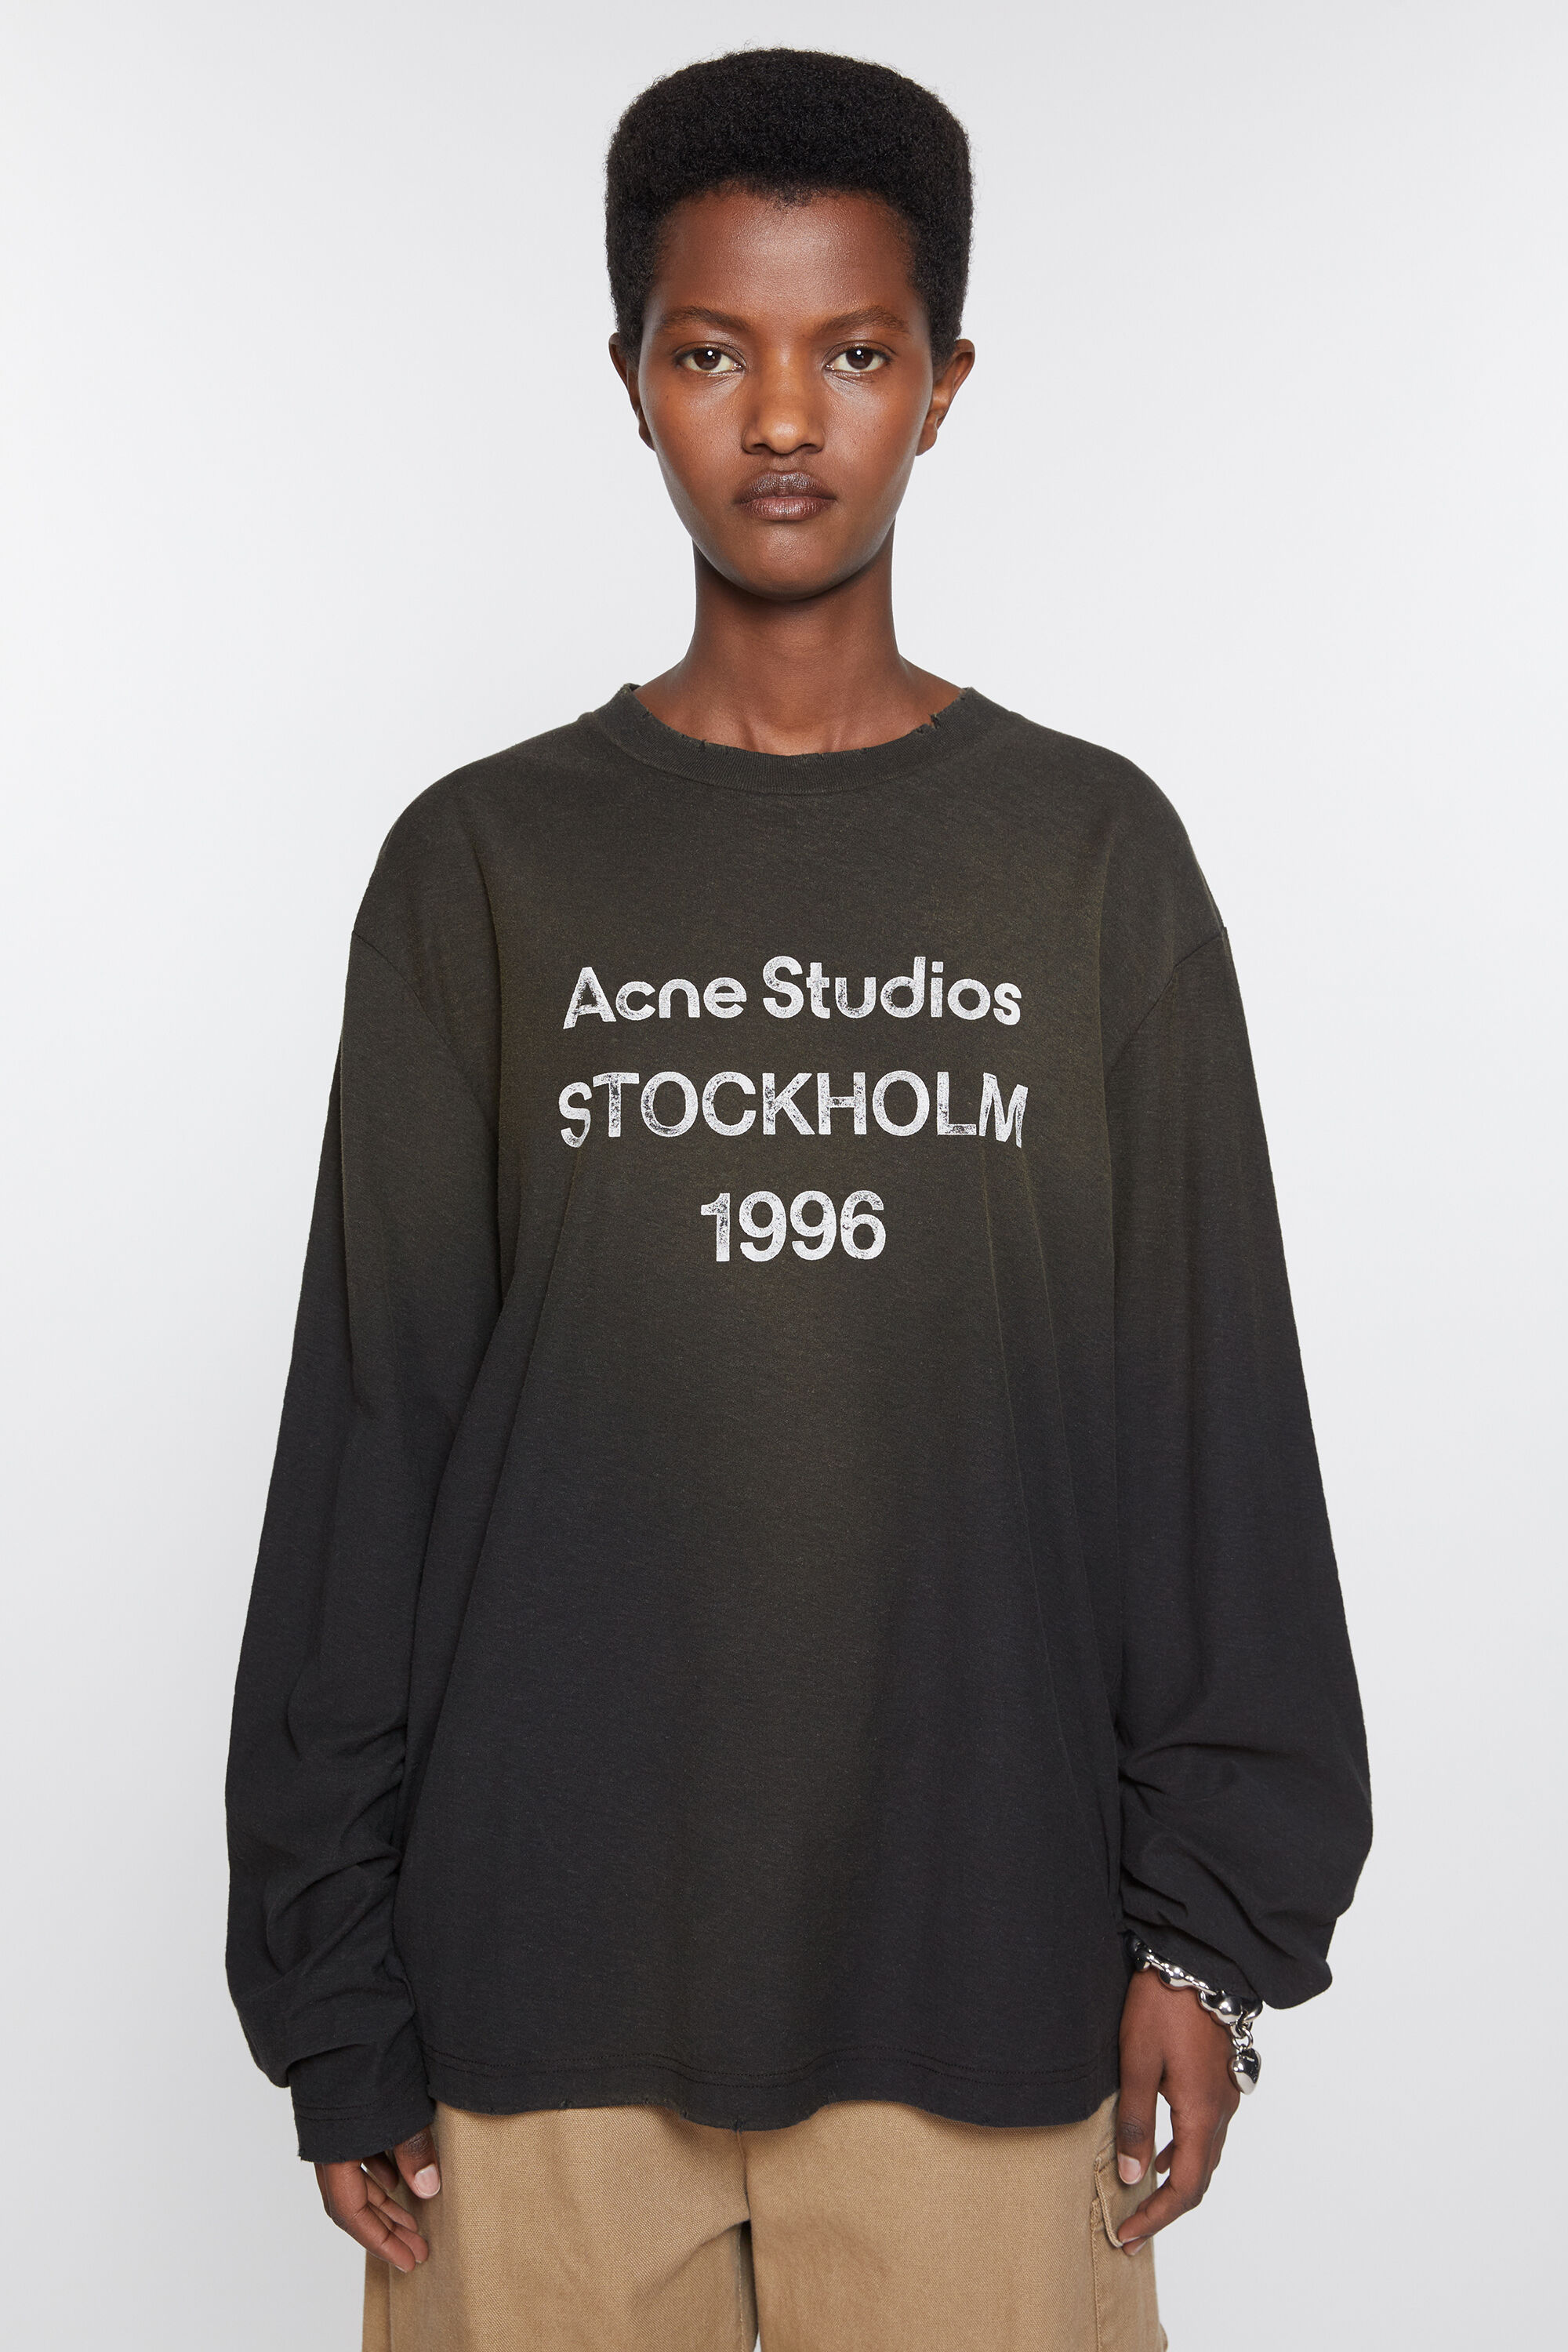 Acne Studios – Women's long sleeve t-shirts